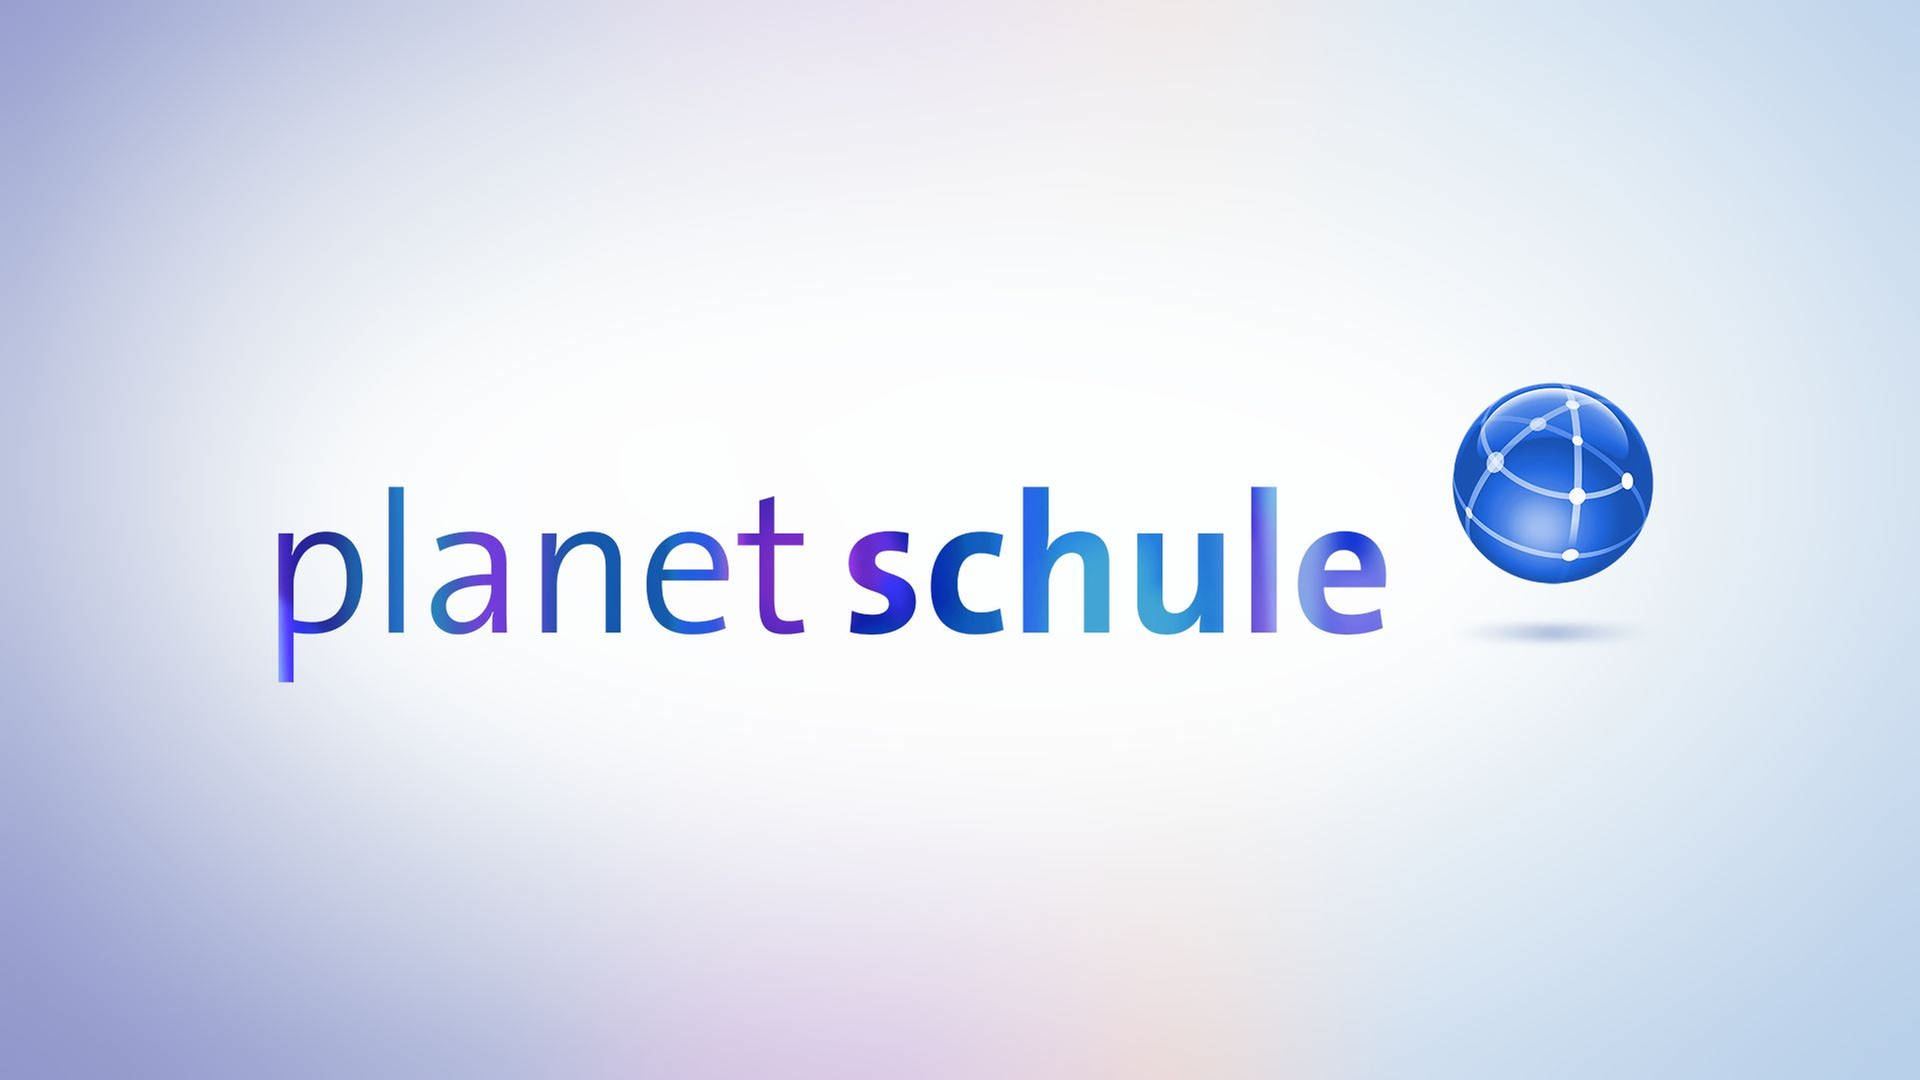 Planet schule